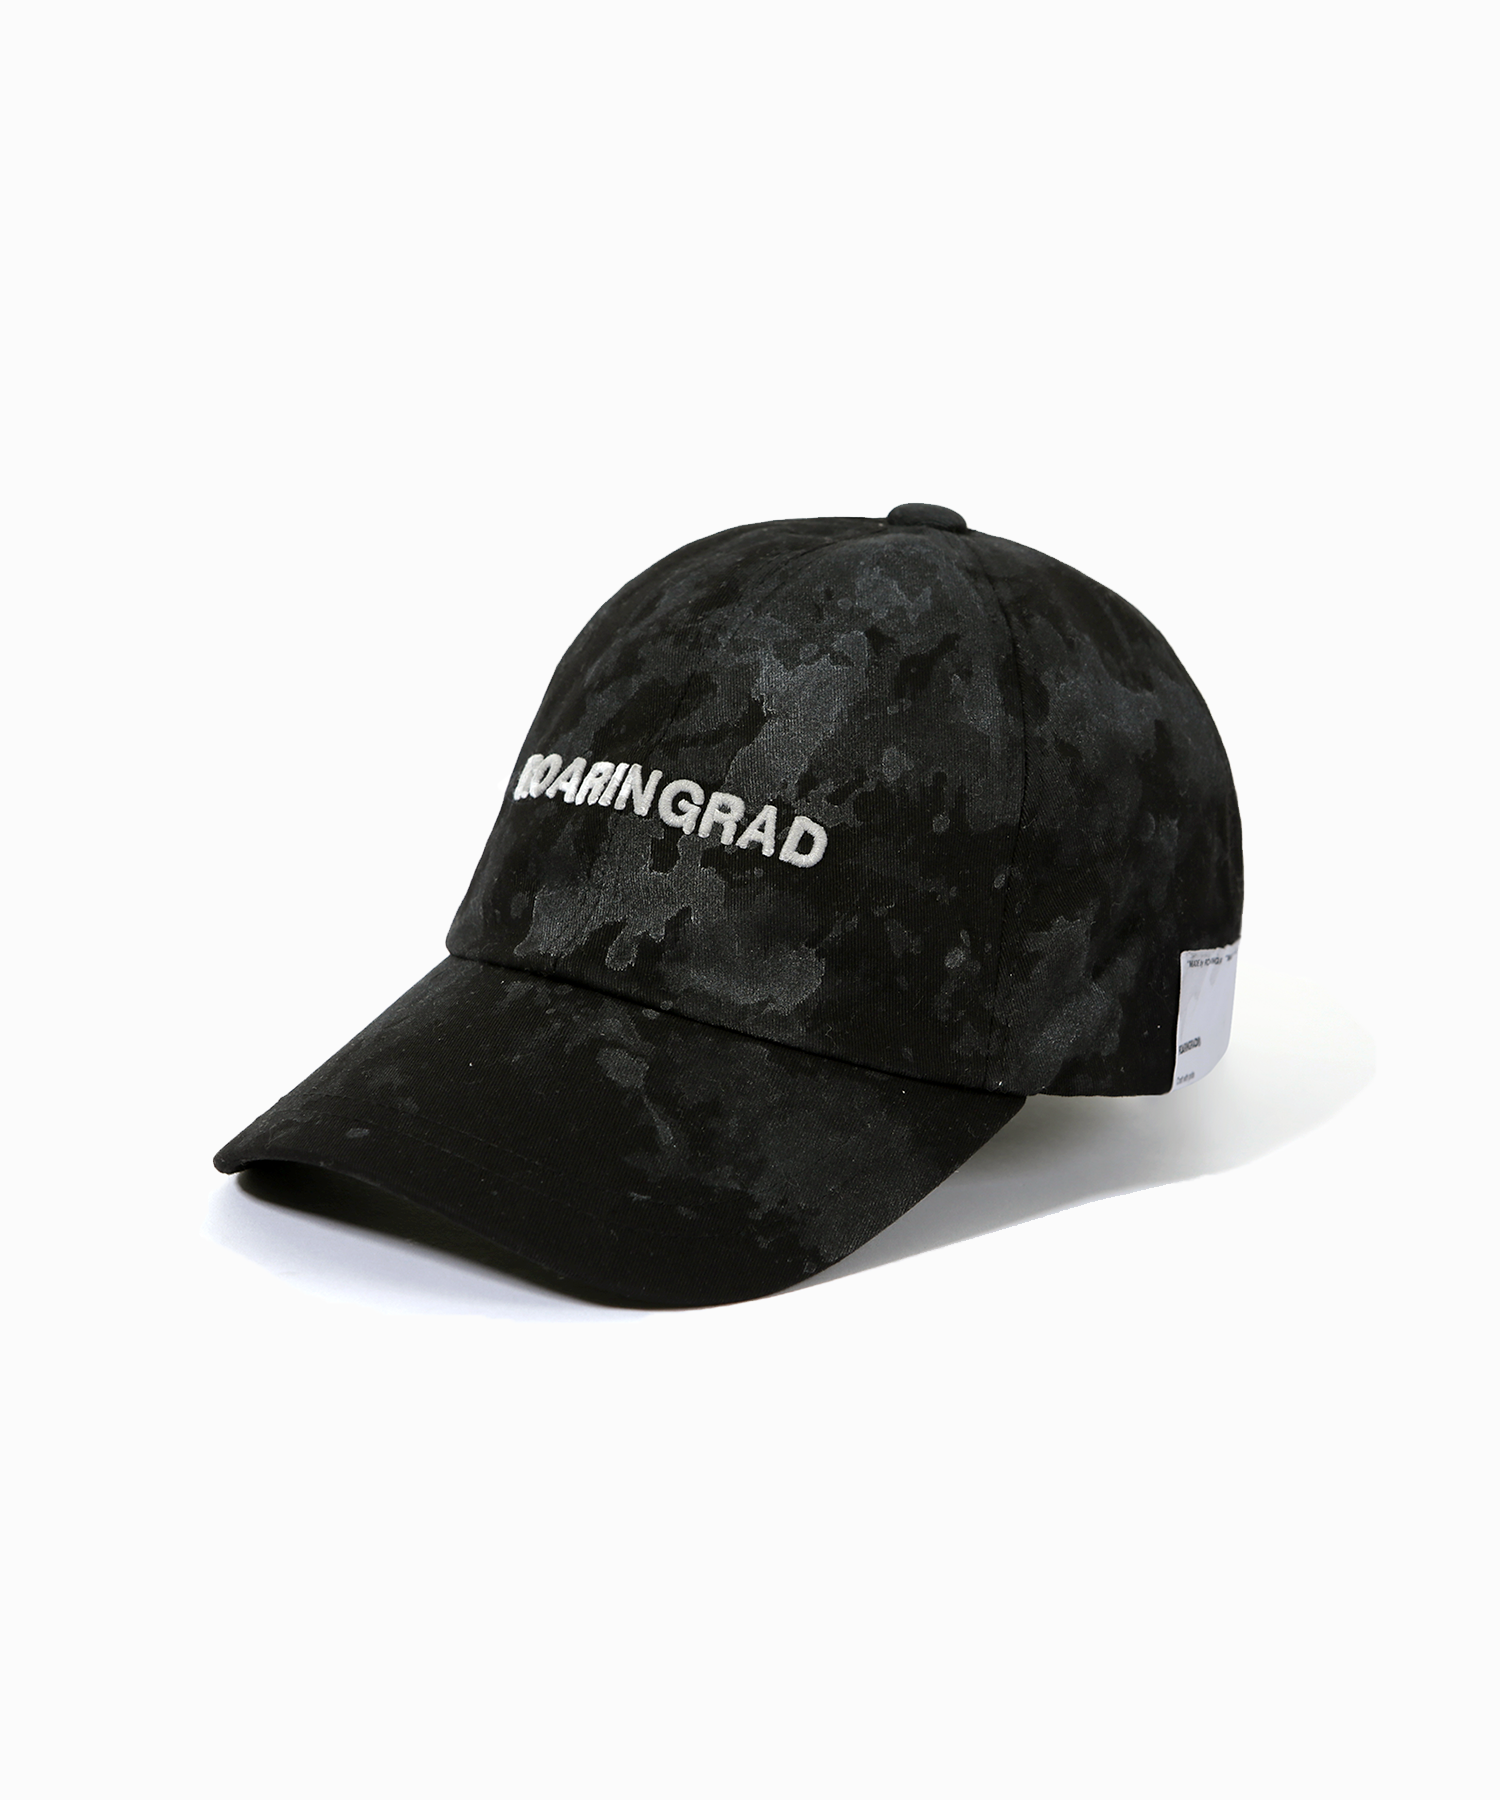 Dirty washed ball cap-black - 로어링라드(ROARINGRAD)